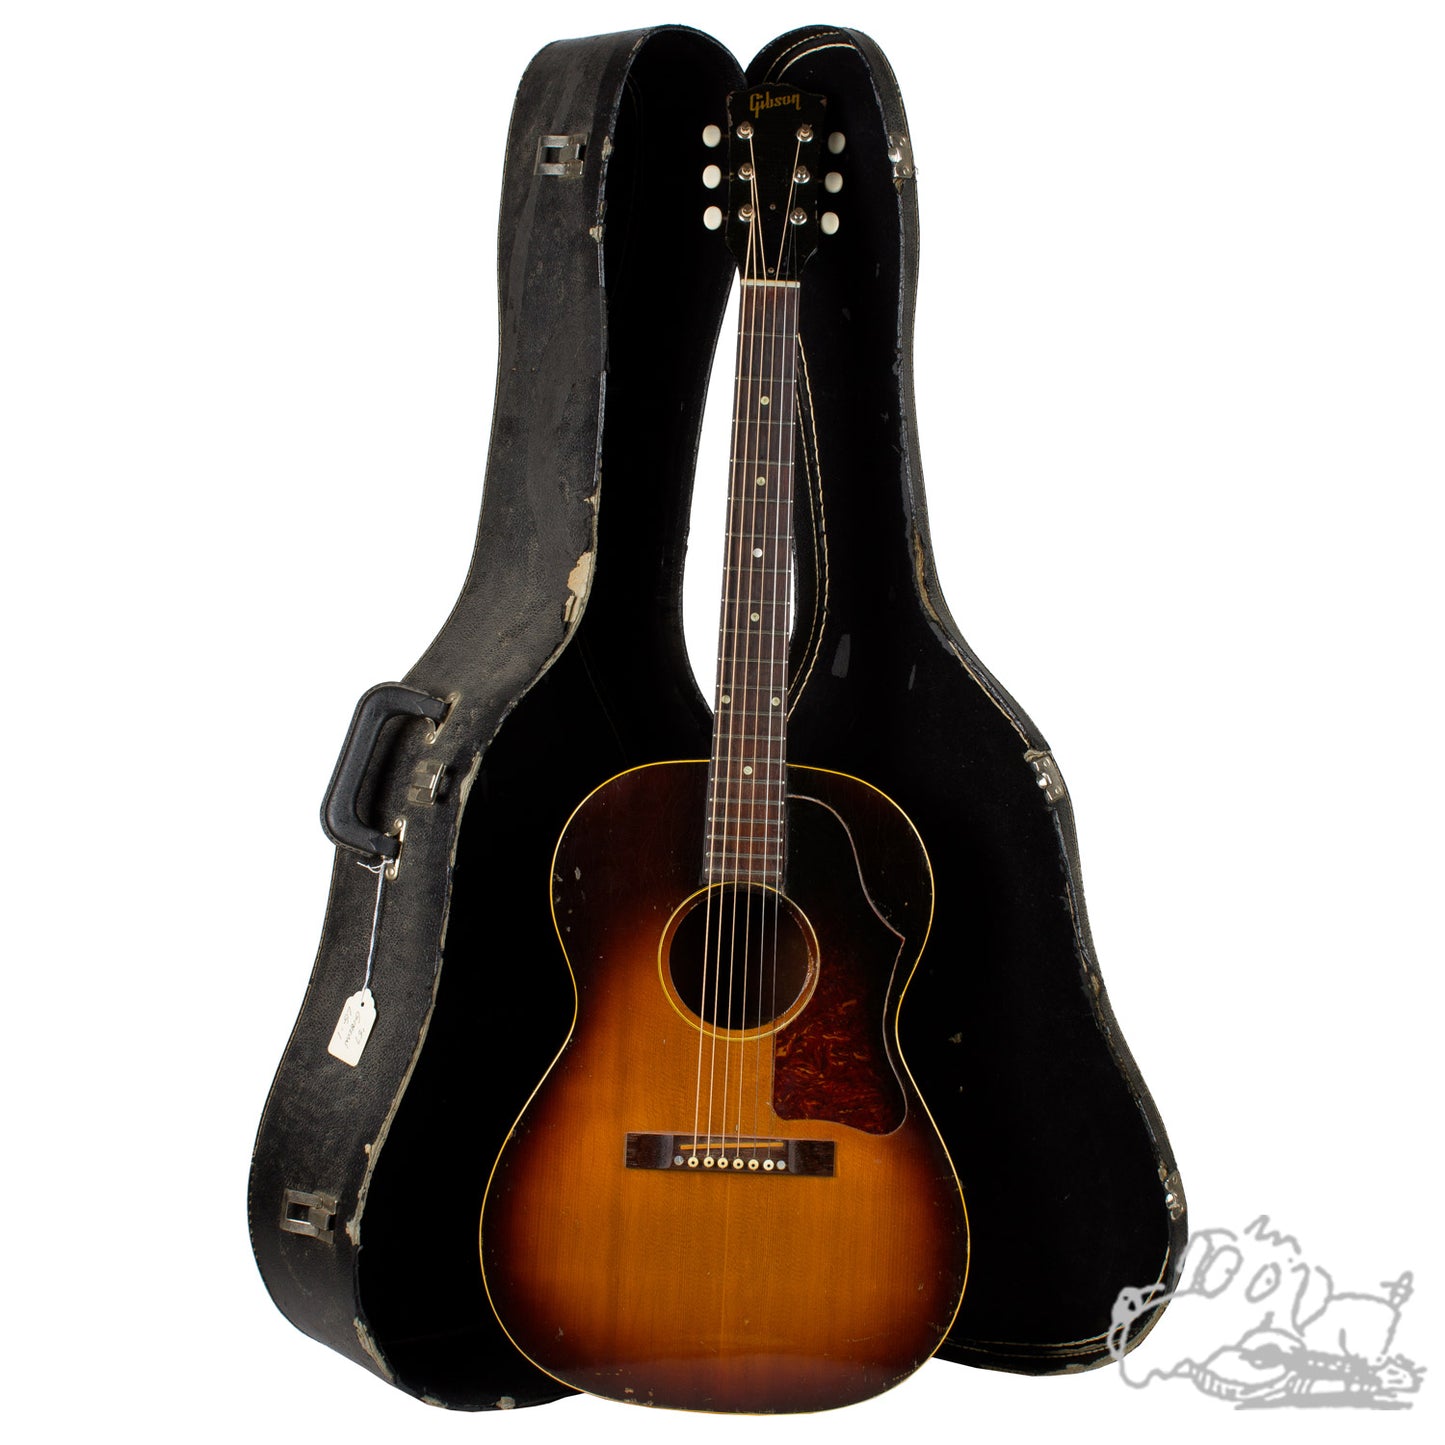 1957 Gibson LG-1